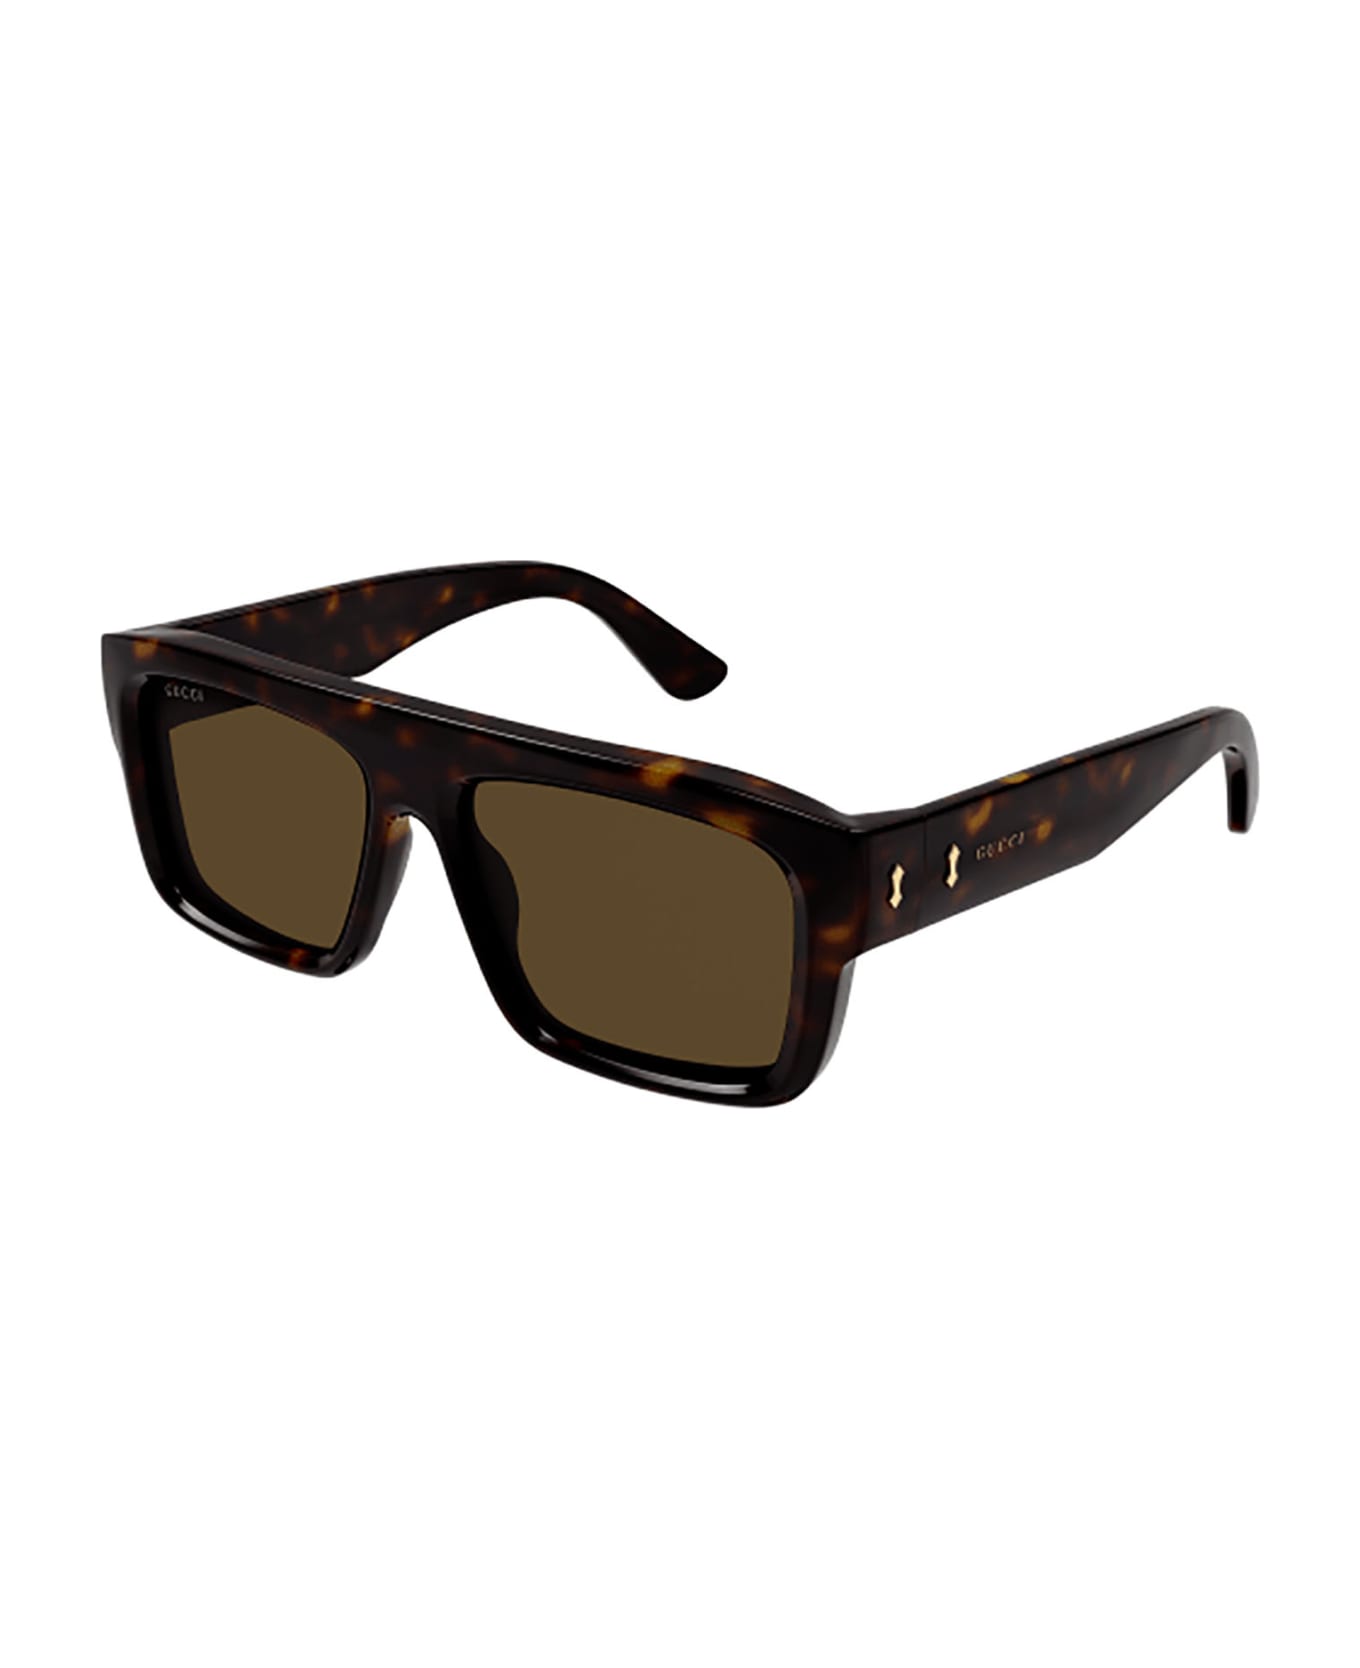 Gucci Eyewear GG1461S Sunglasses - Havana Havana Brown サングラス